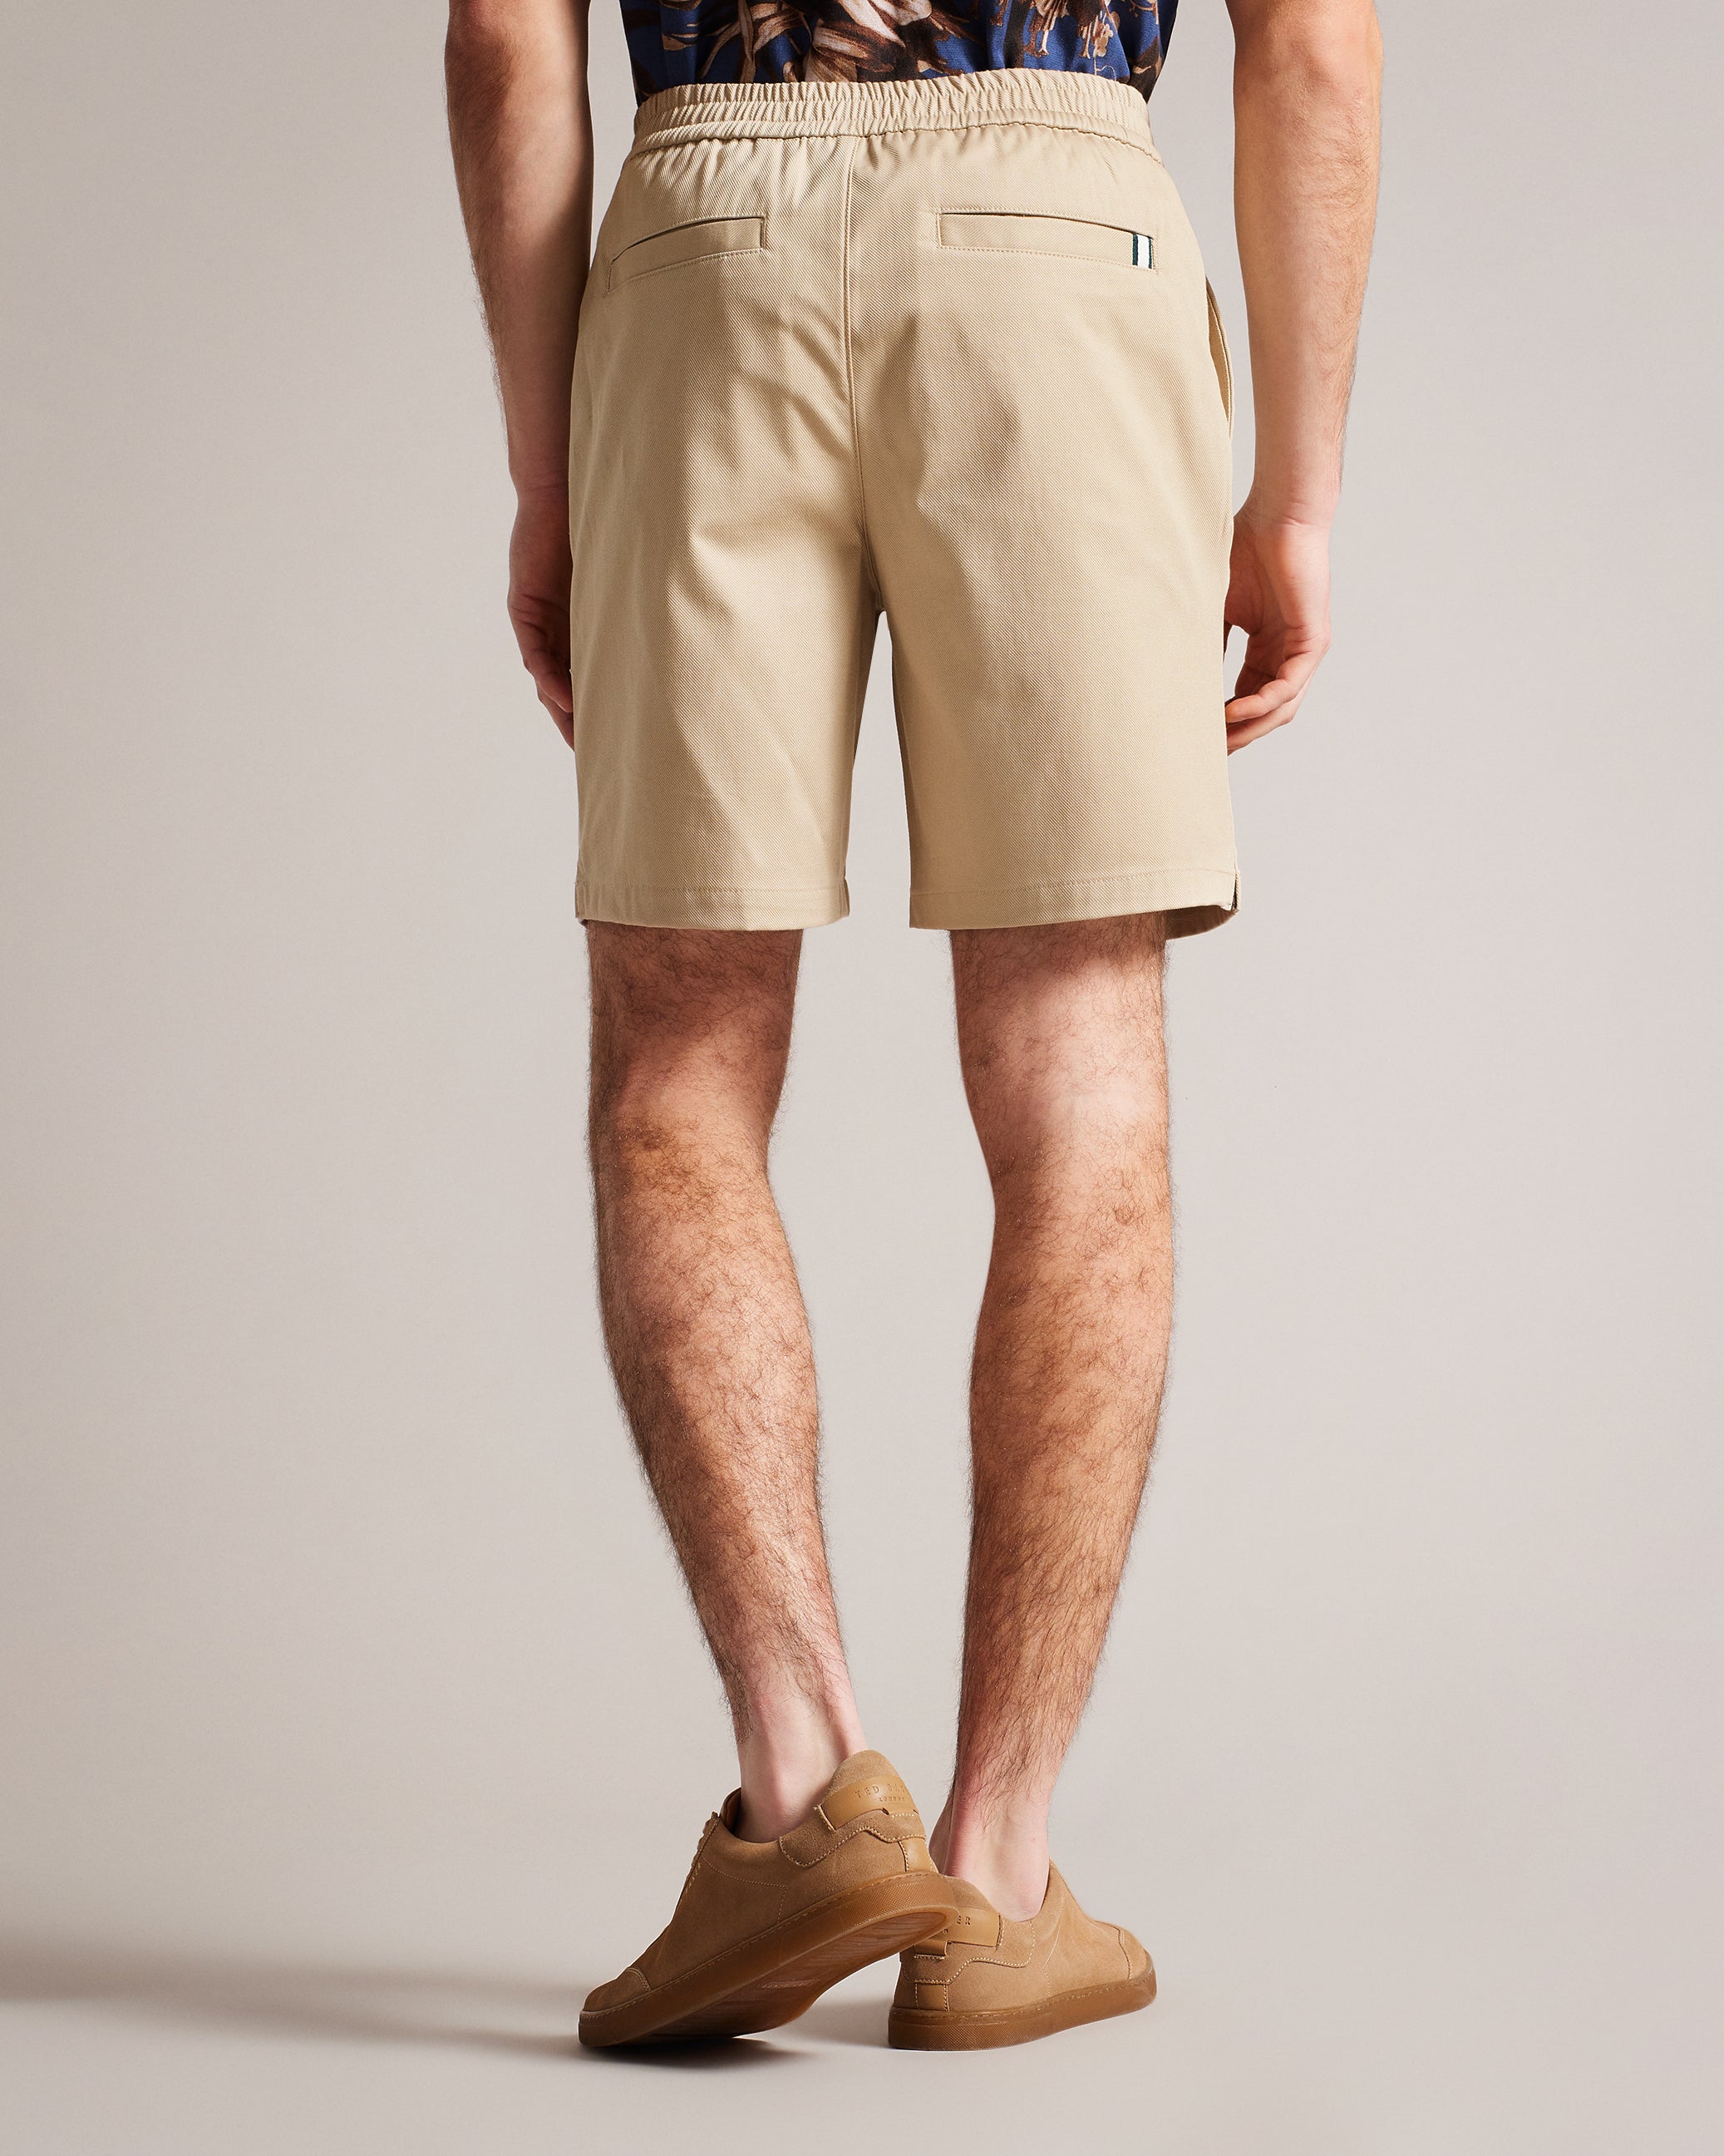 Creswel Elasticated Drawstring Shorts